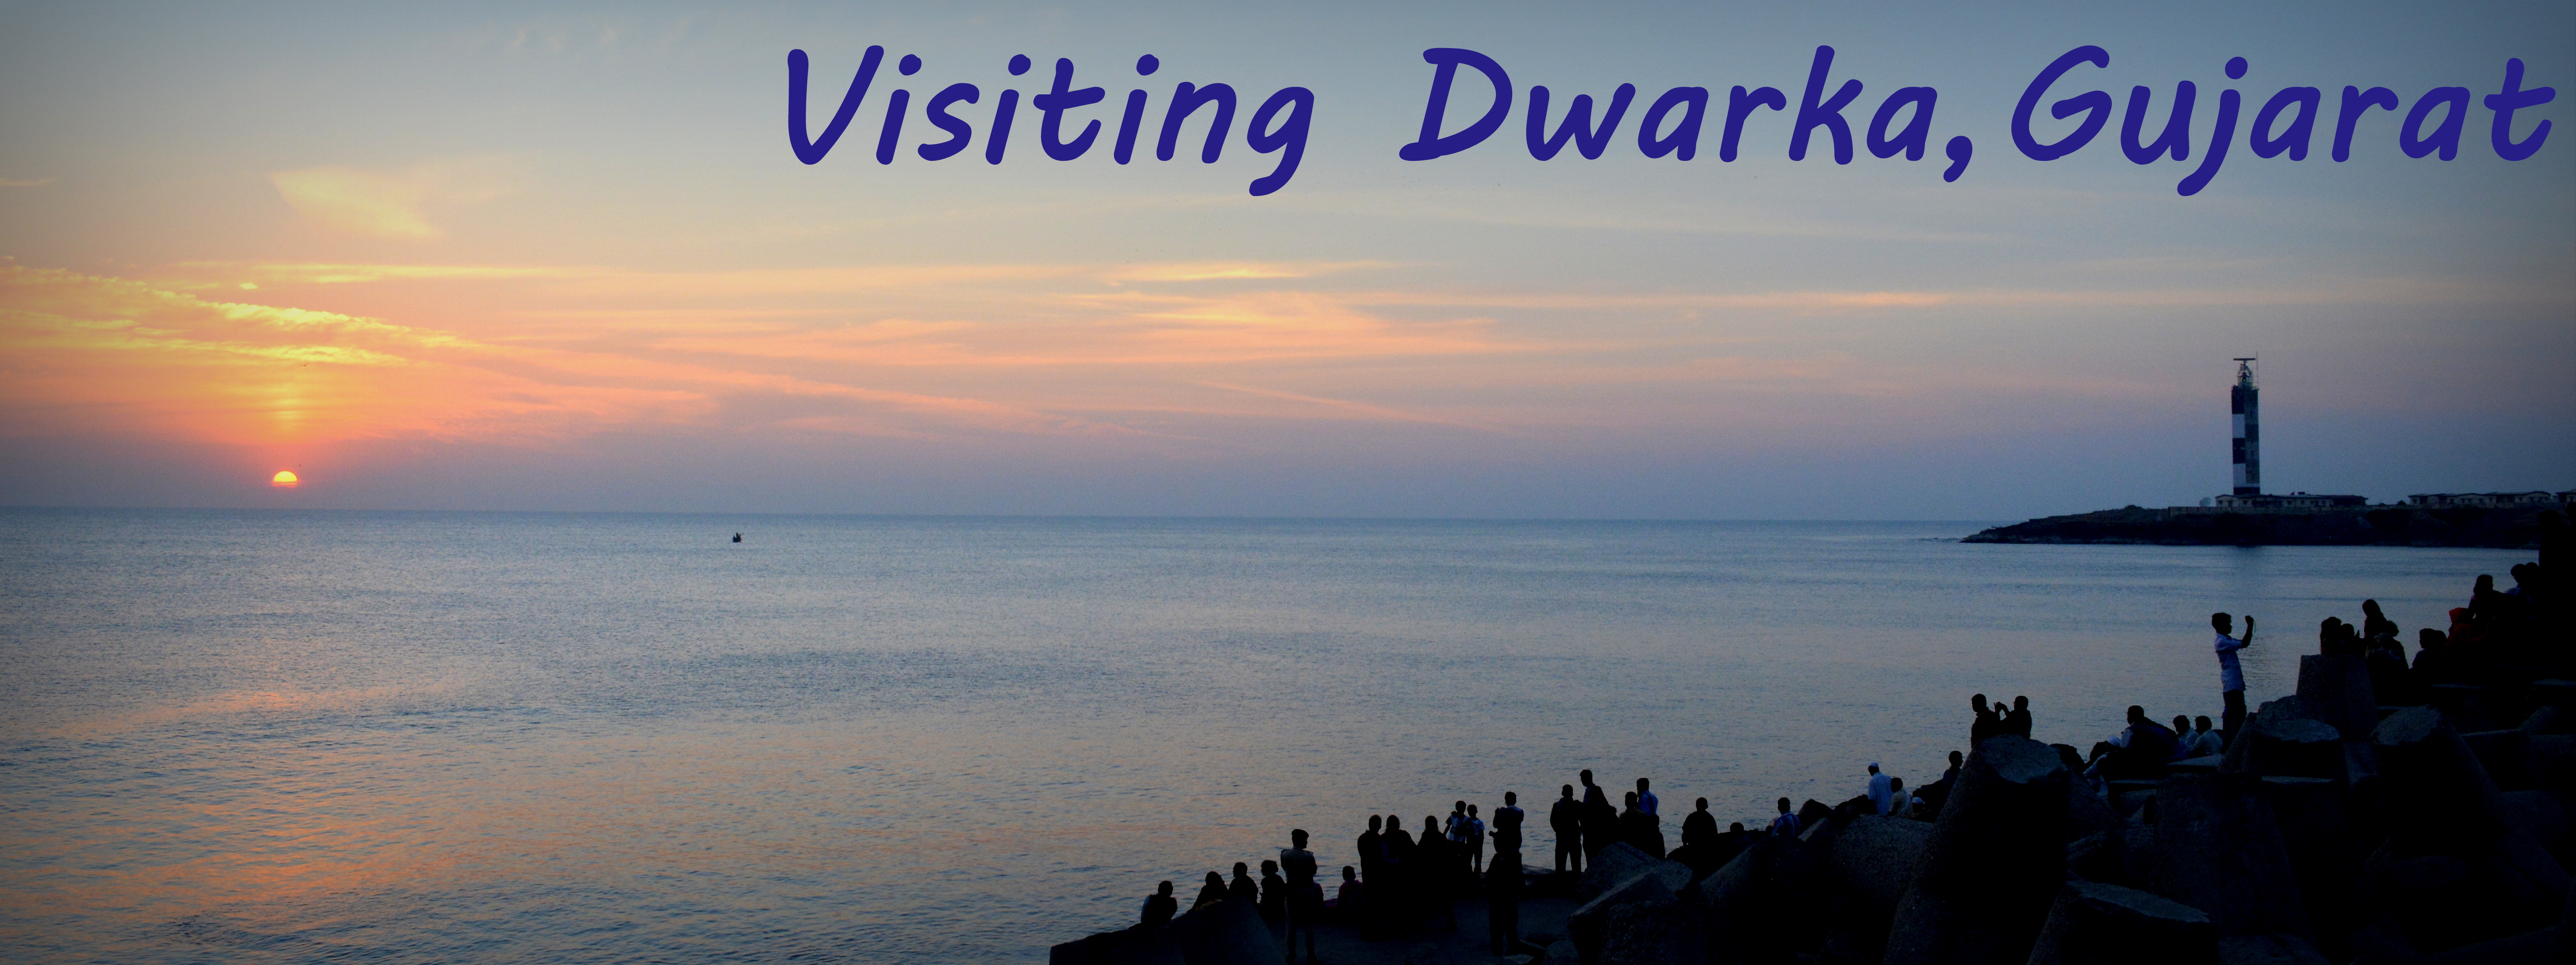 Visiting Dwarka, Gujarat